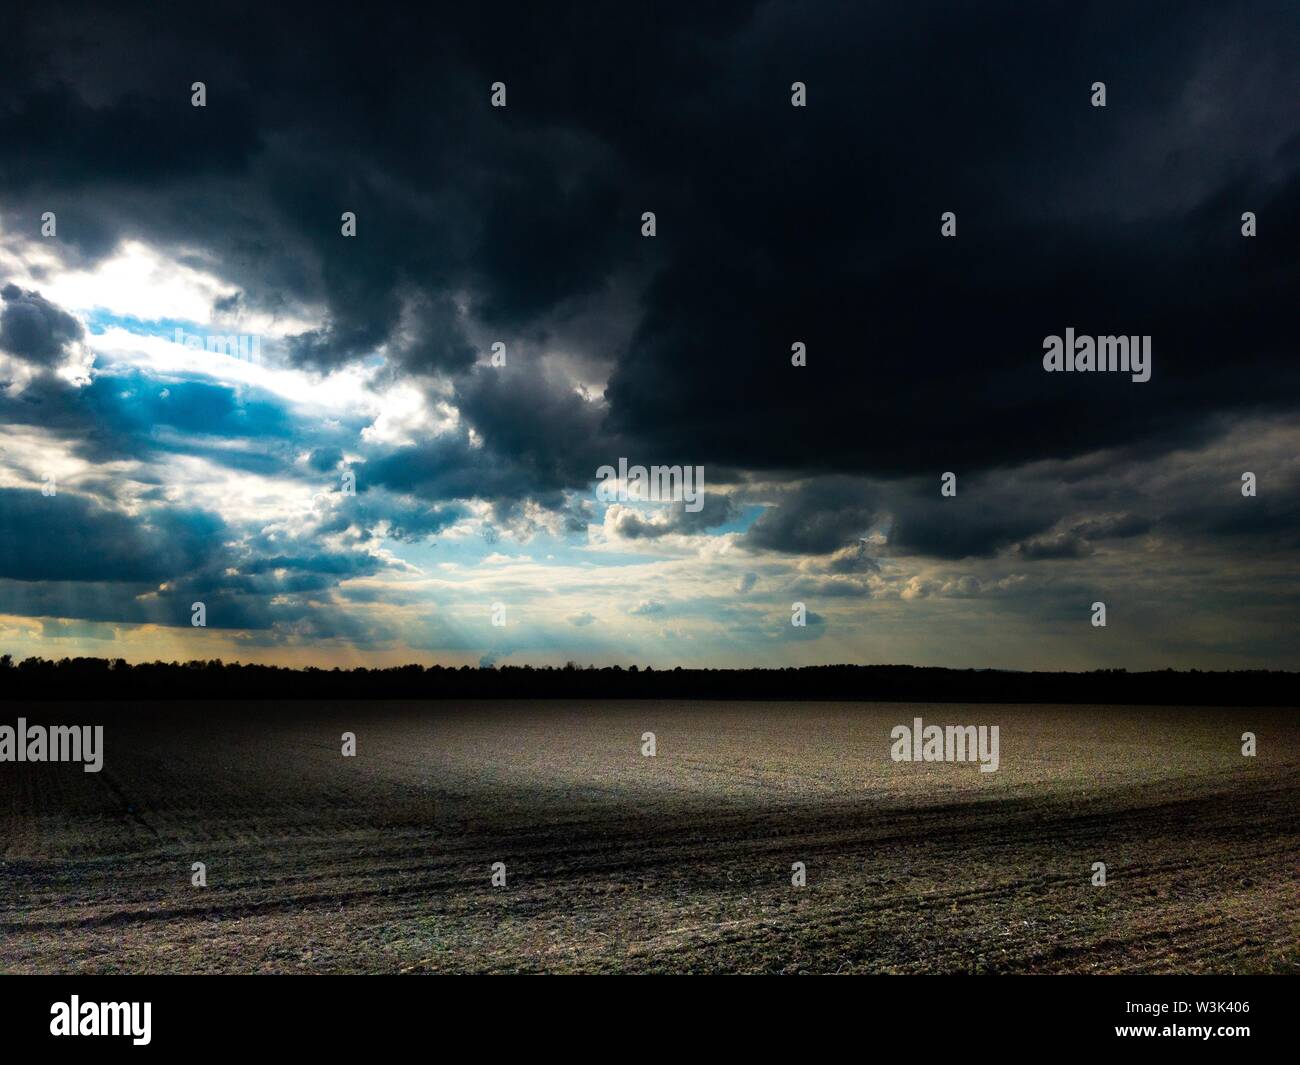 dark cloudy sky with sun shine on field in dark atmosphere Stock Photo